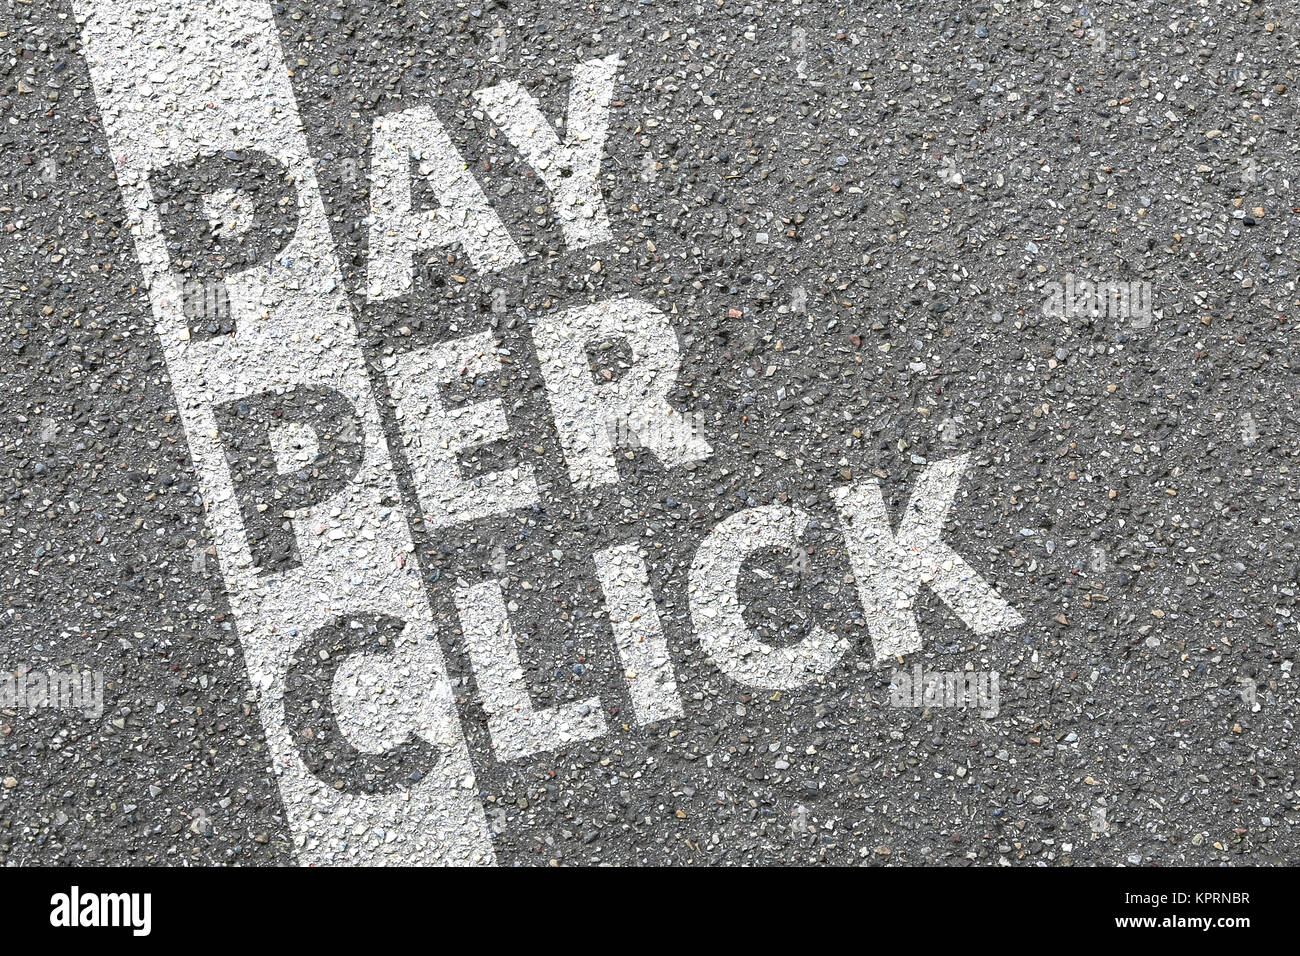 Pay per click PPC Werbung werben bezahlen Internet Business Konzept bestellen Stock Photo